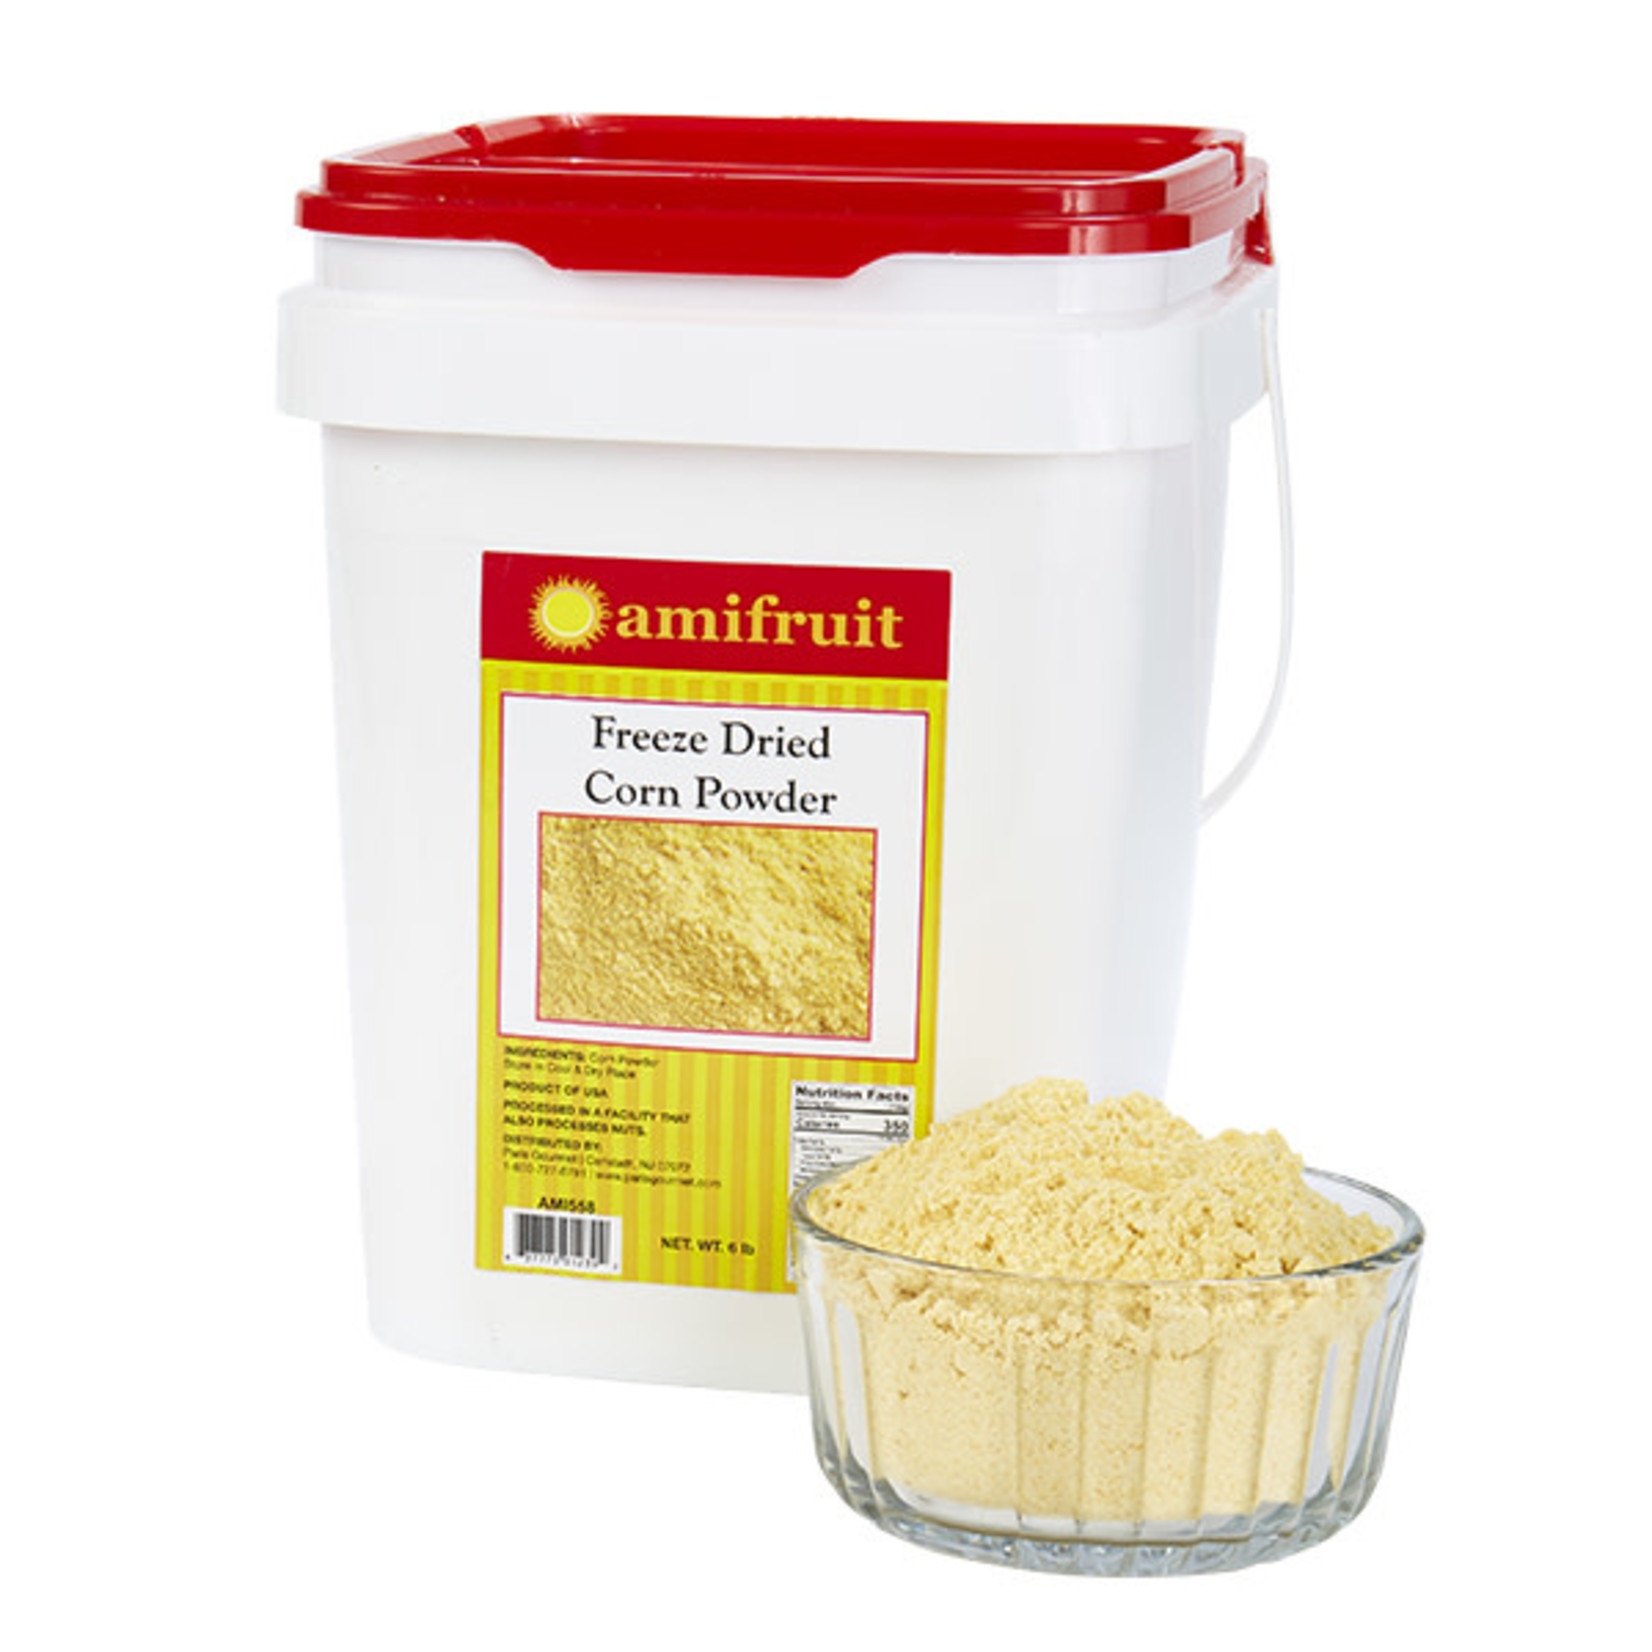 Amifruit Amifruit - Freeze dried Corn Powder - 6lb, AMI558